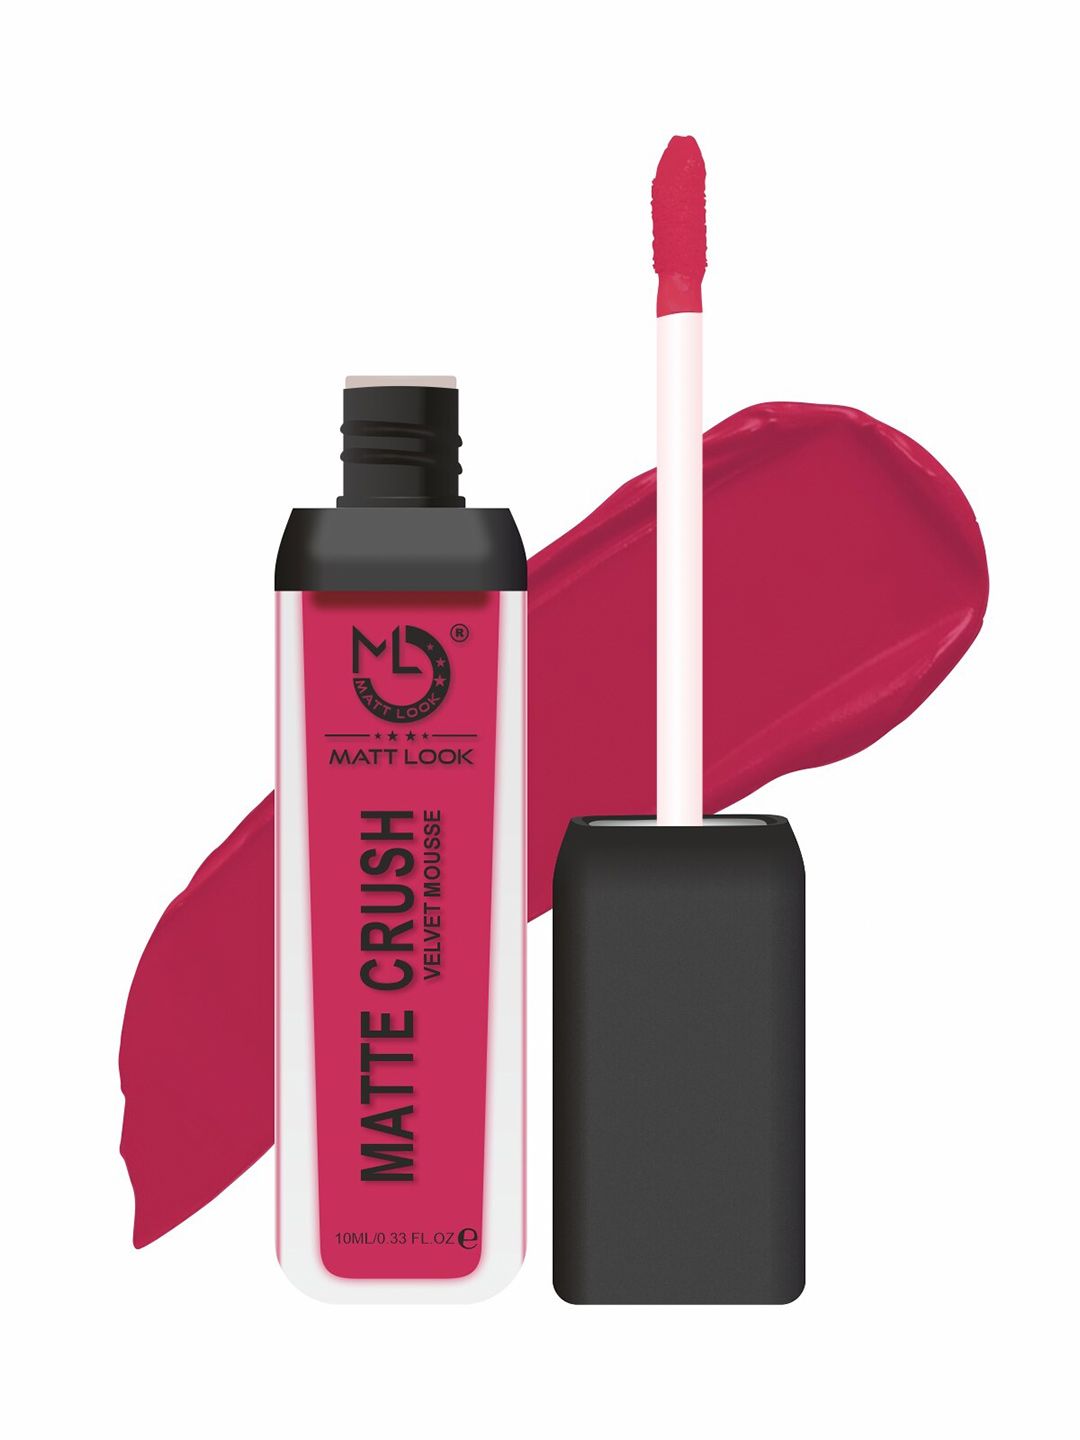 MATTLOOK Crush Velvet Mousse Lipstick- Deep Raspberry (Pack of 2) Price in India